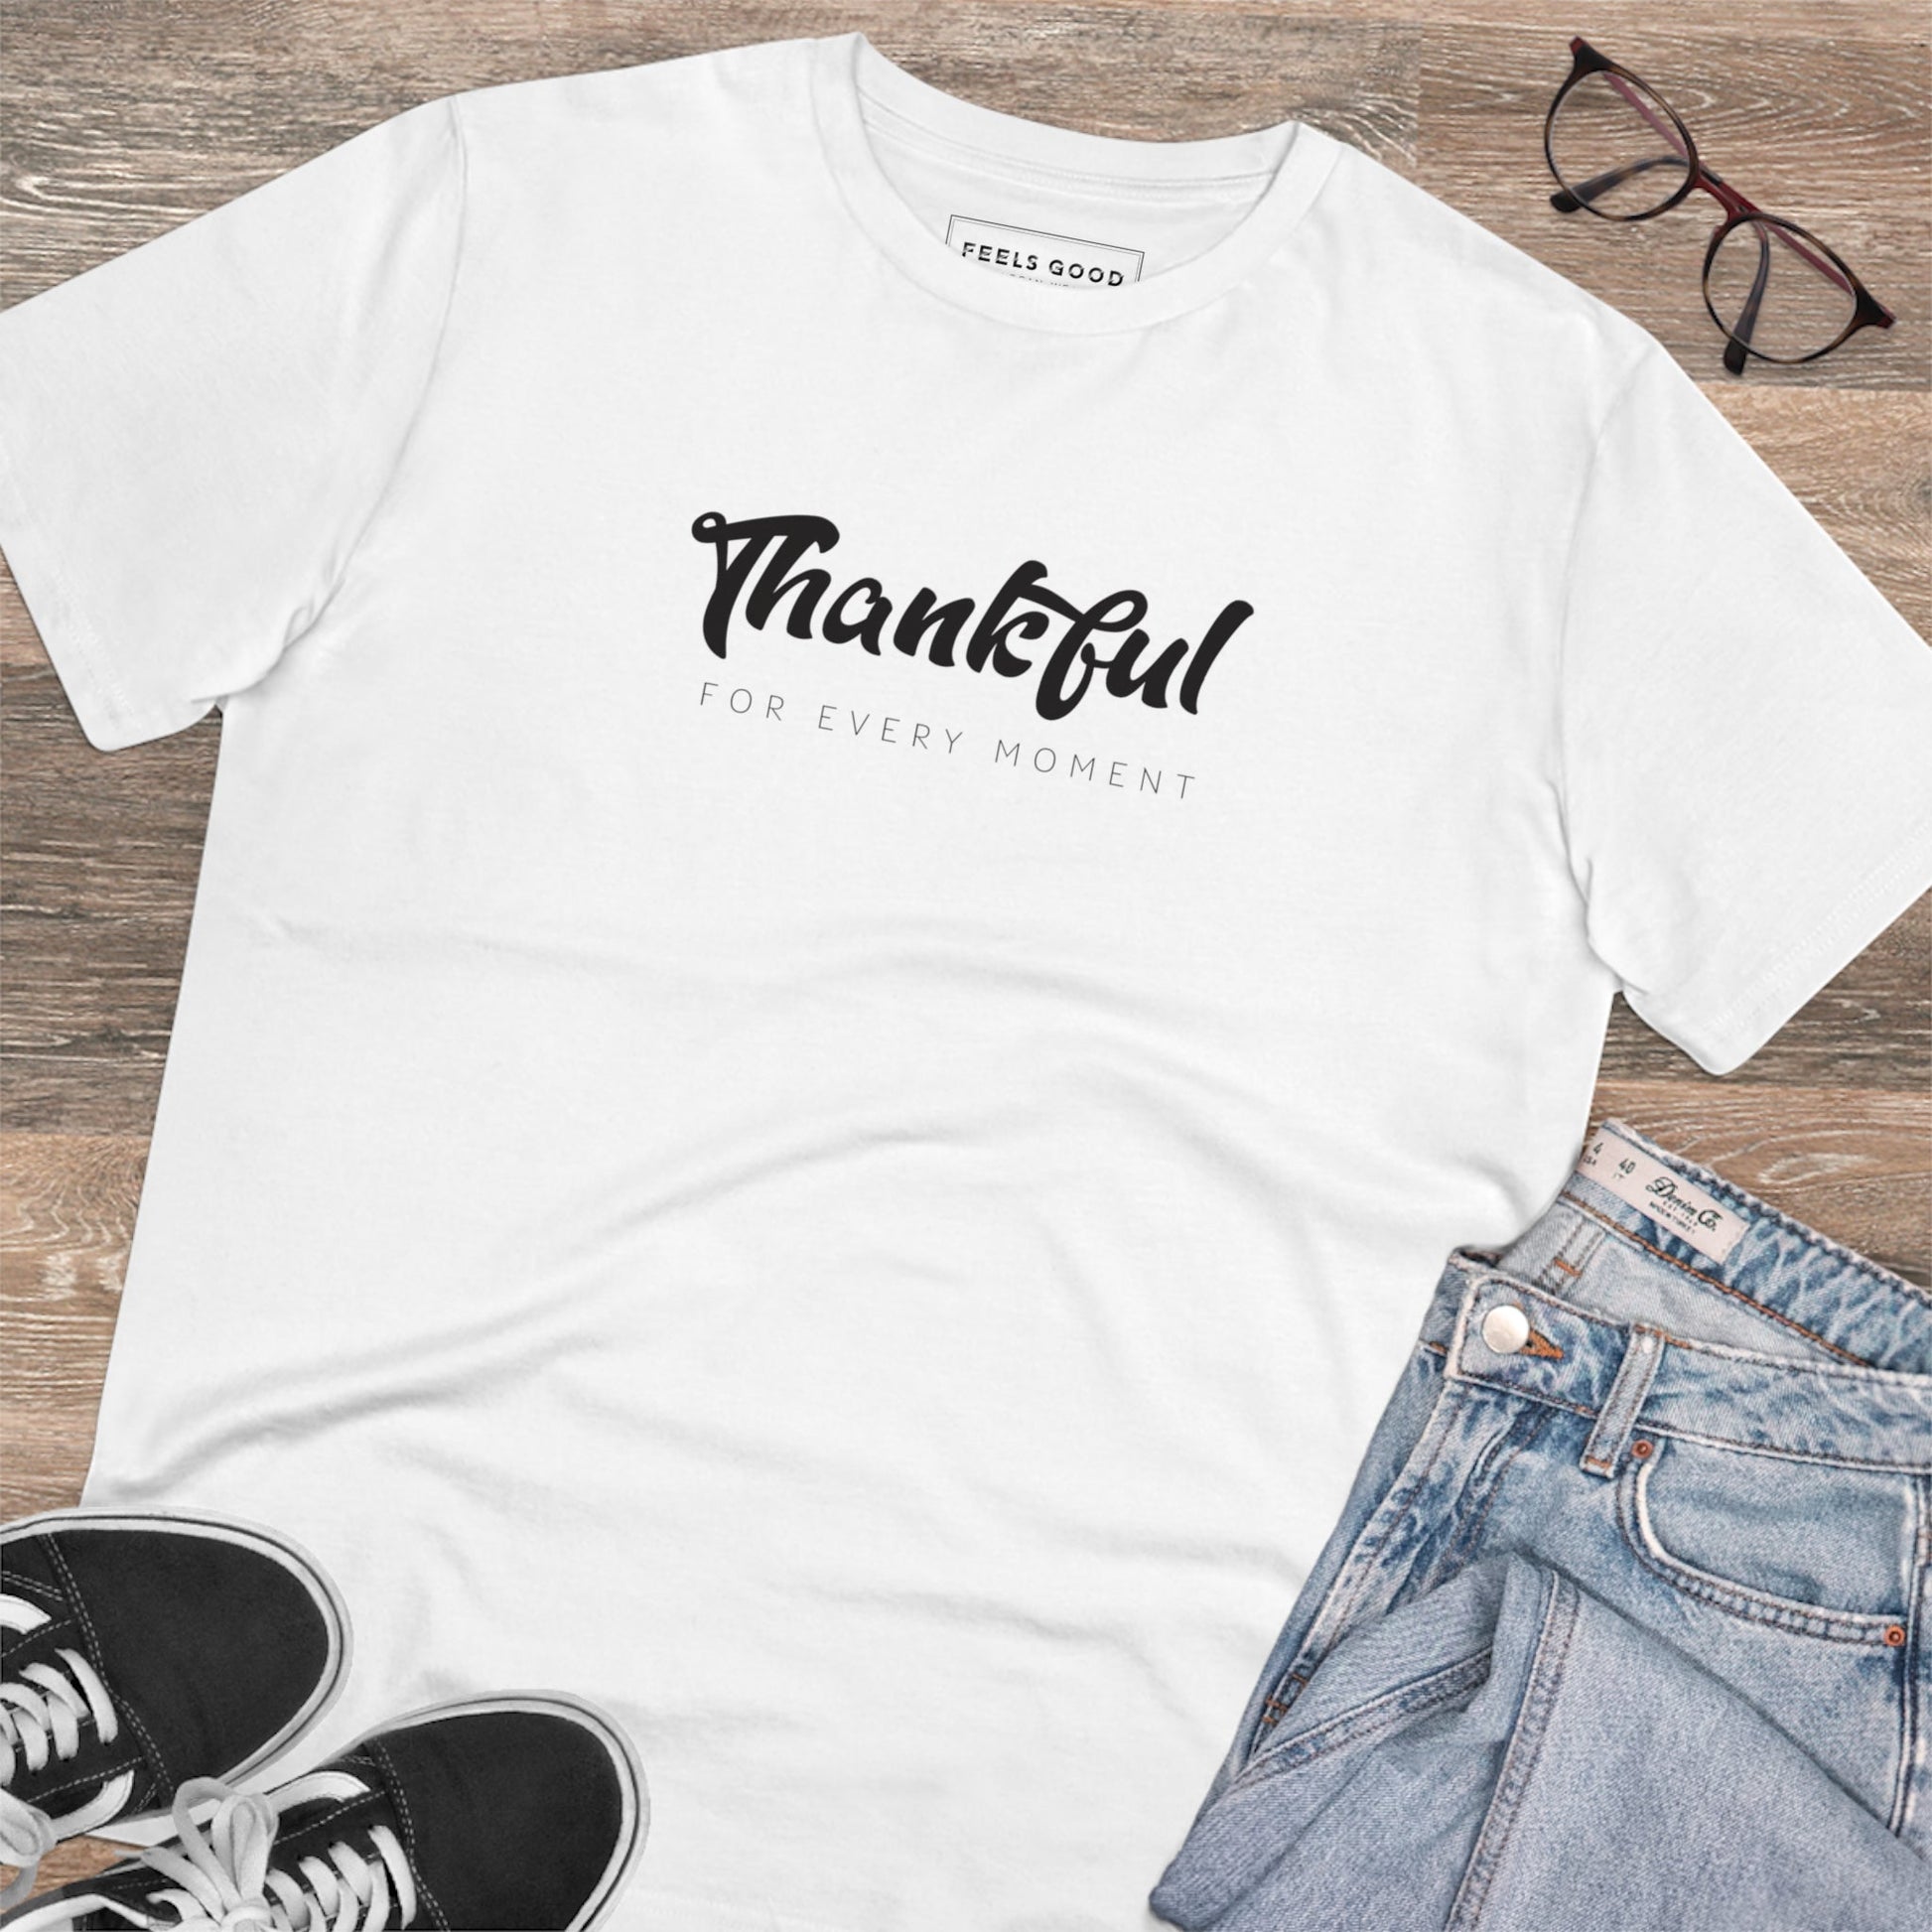 Positive 'Thankful' Organic Cotton T-shirt - Fun Tshirt